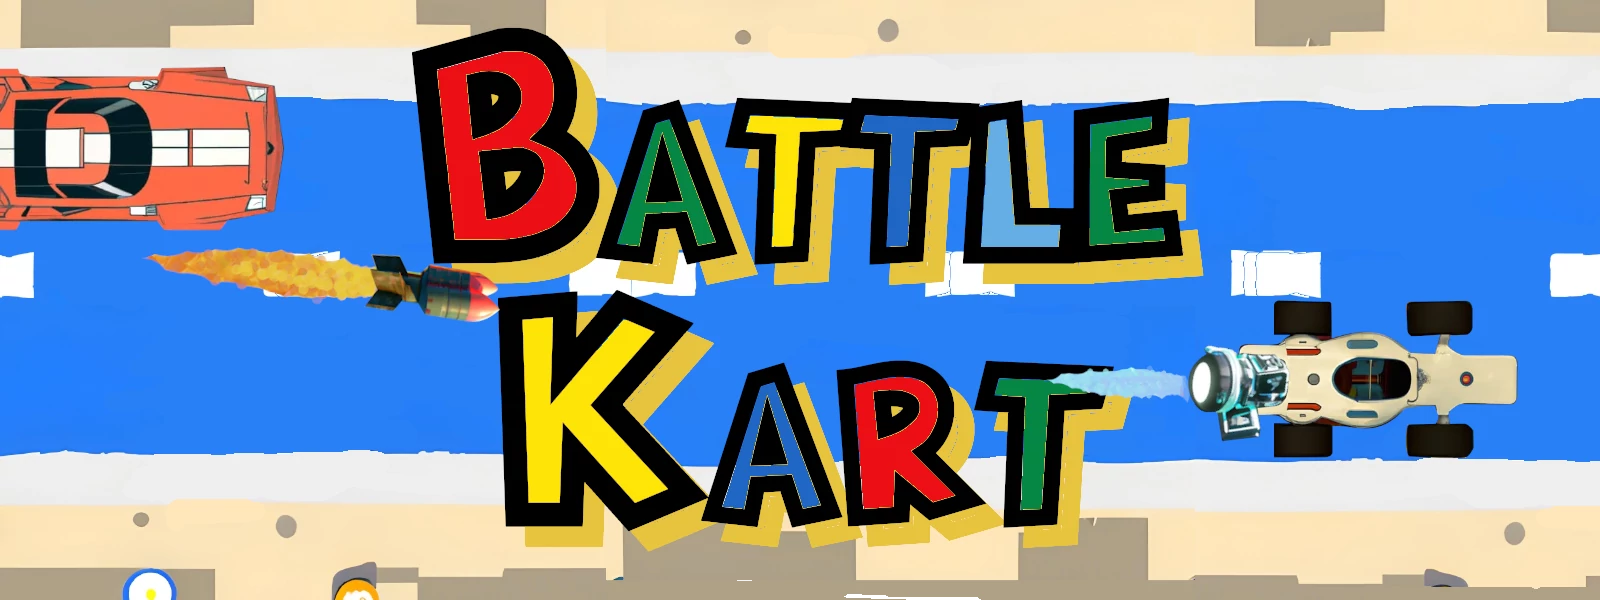 battle kart game